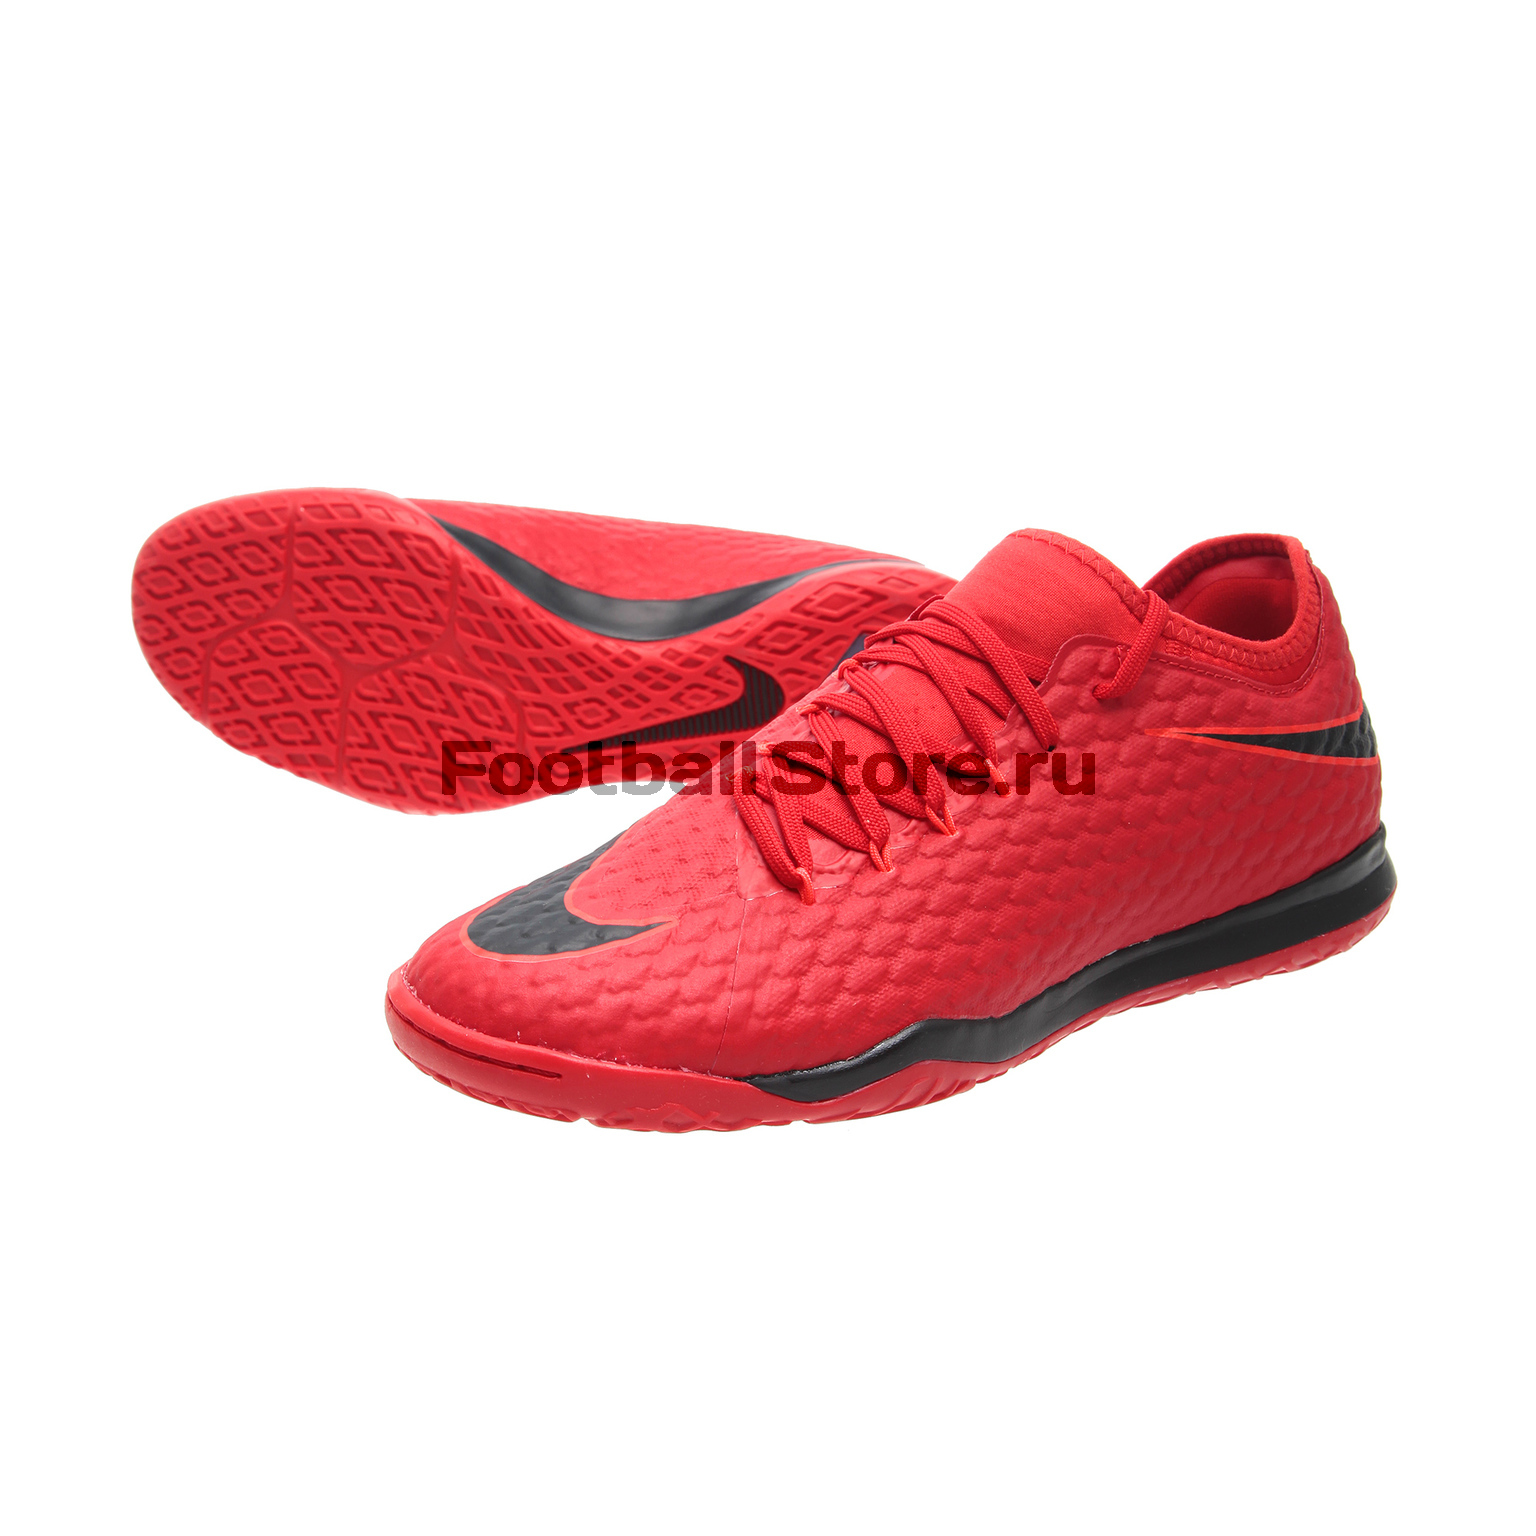 Обувь для зала Nike HypervenomX Finale II IC 852572-616